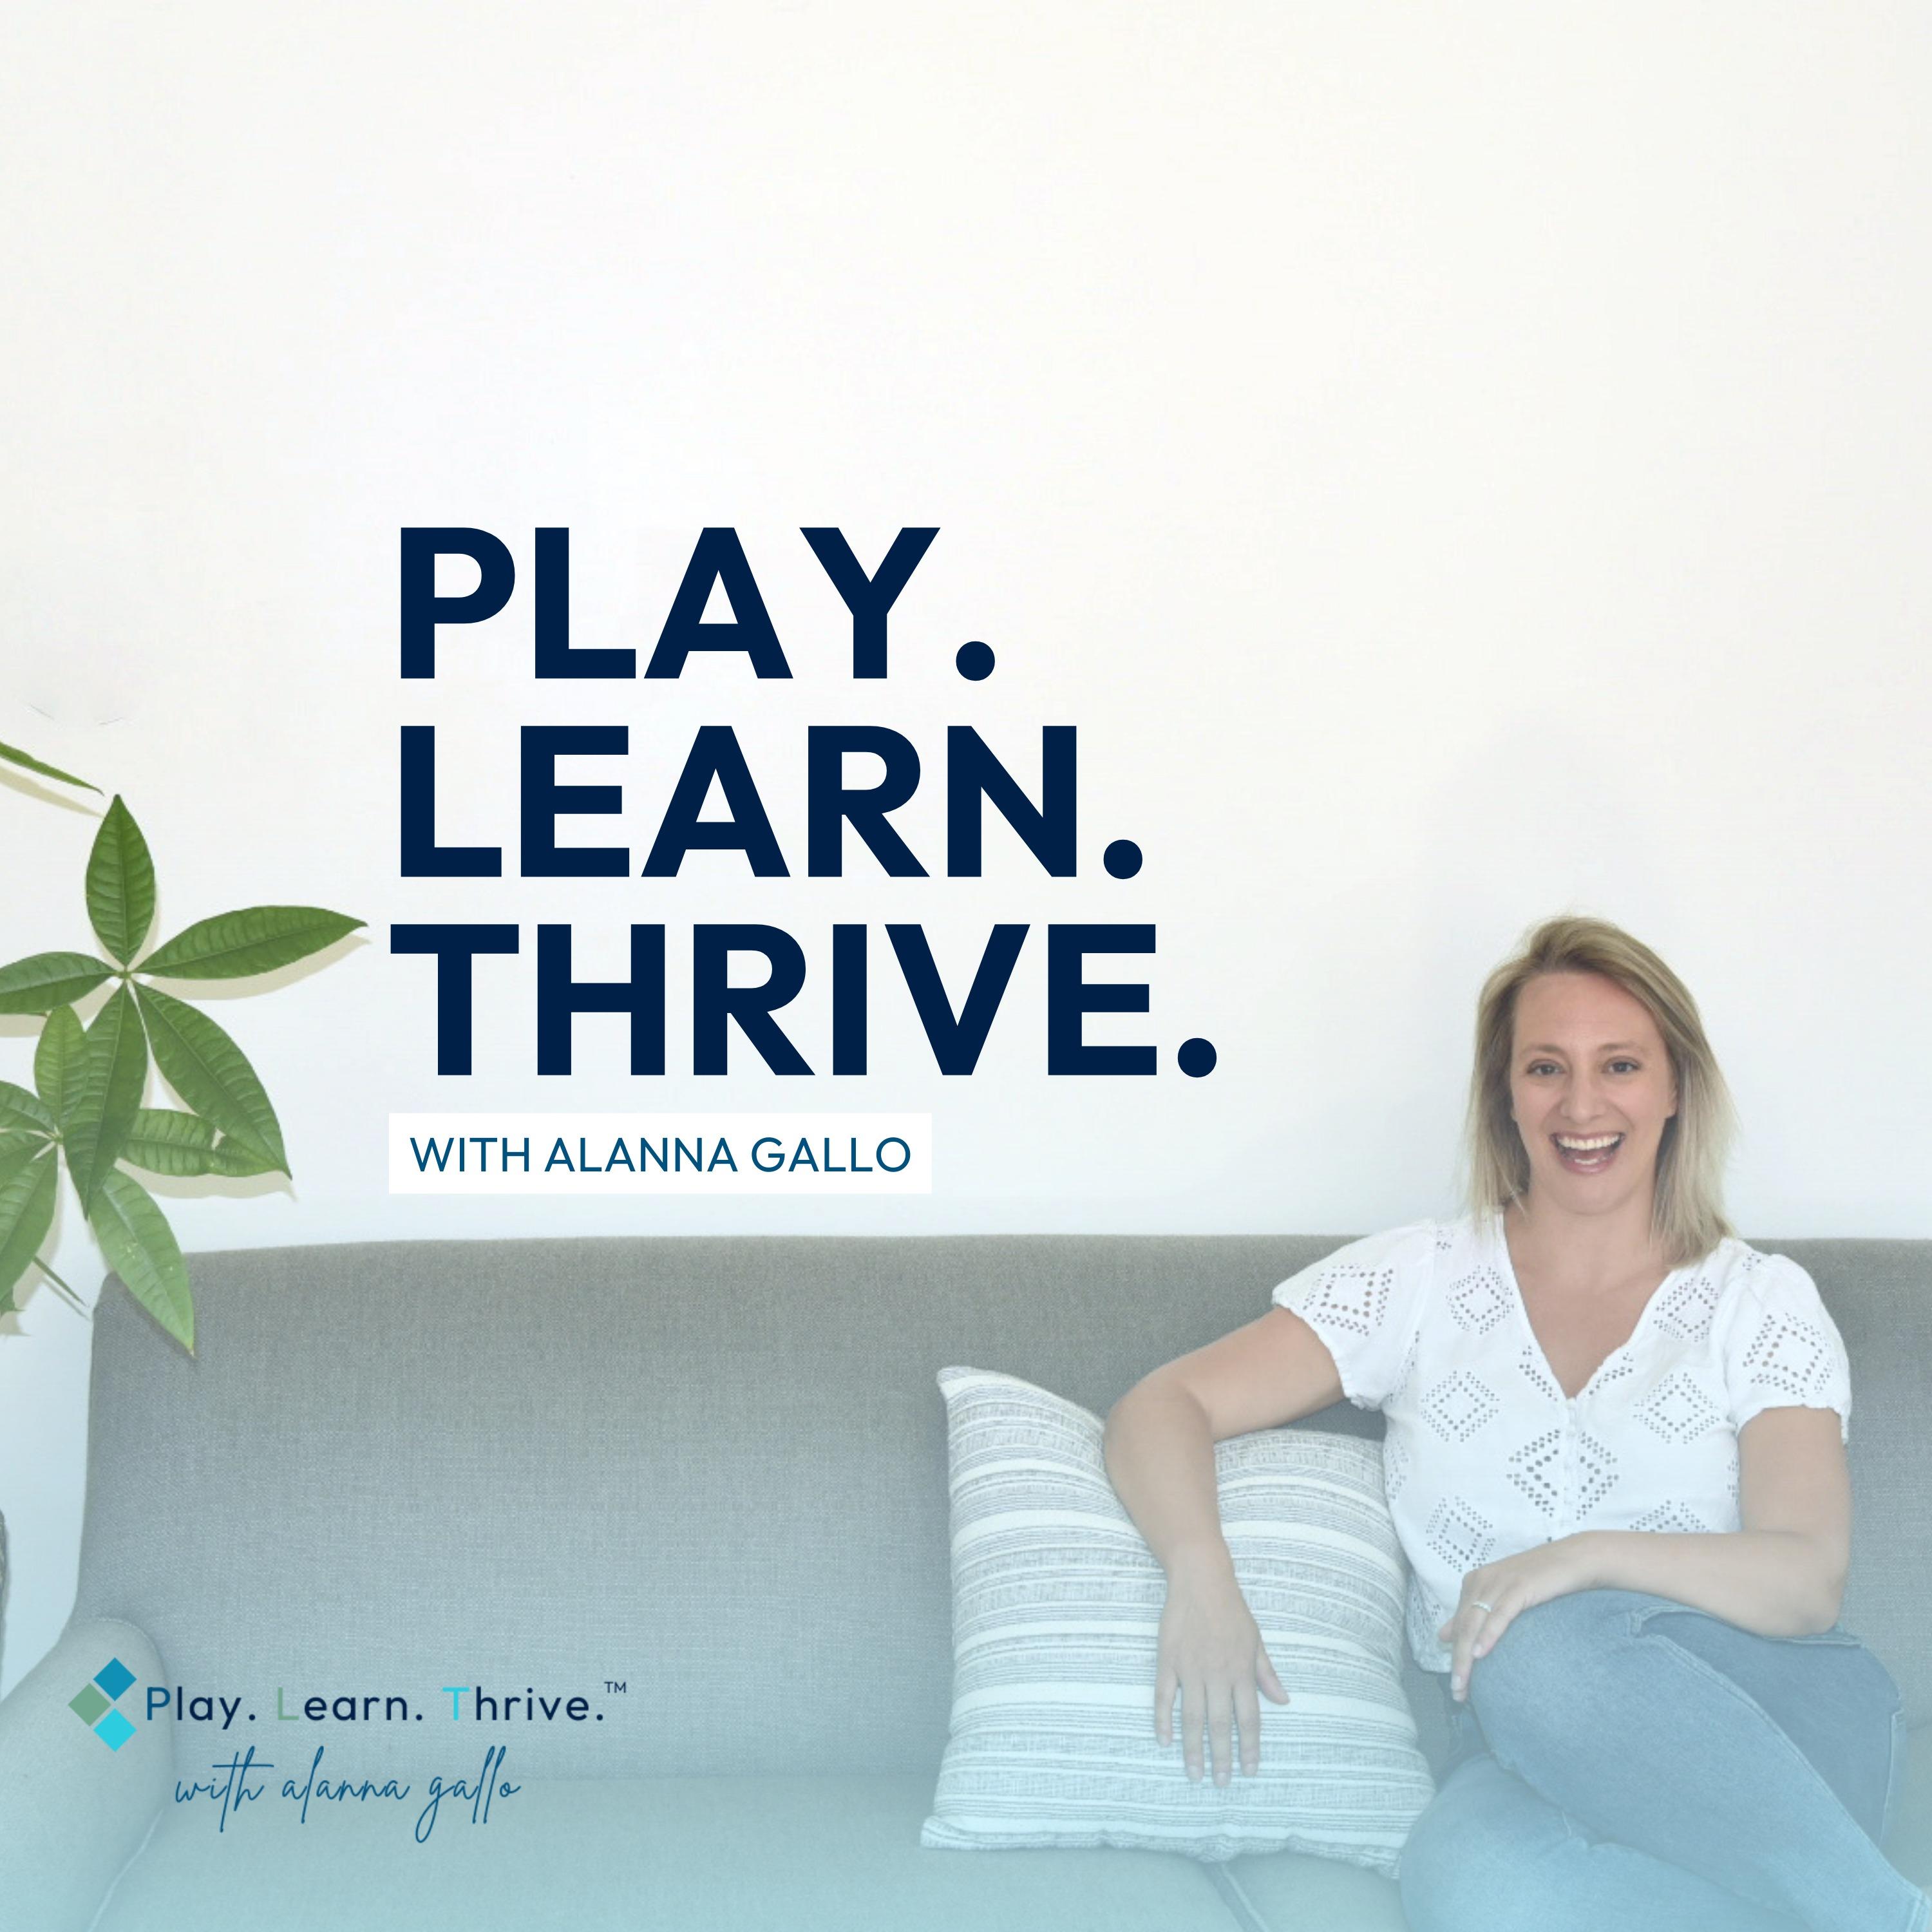 Play. Learn. Thrive. with Alanna Gallo